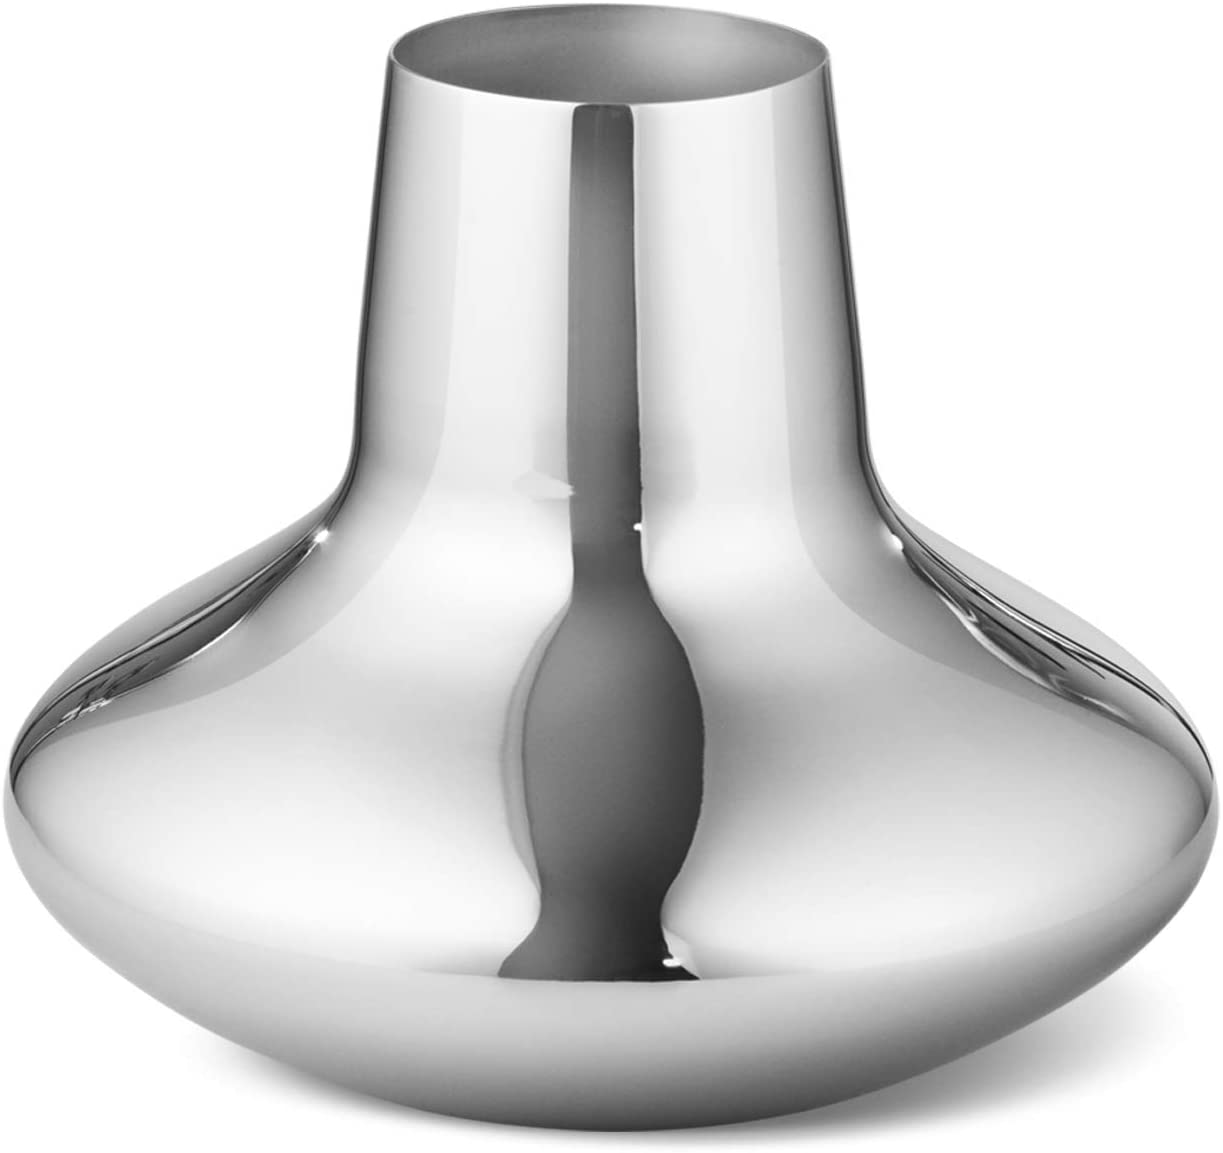 Georg Jensen HK Vase, Stainless Steel, Silver, 27 x 27 x 22.2 cm